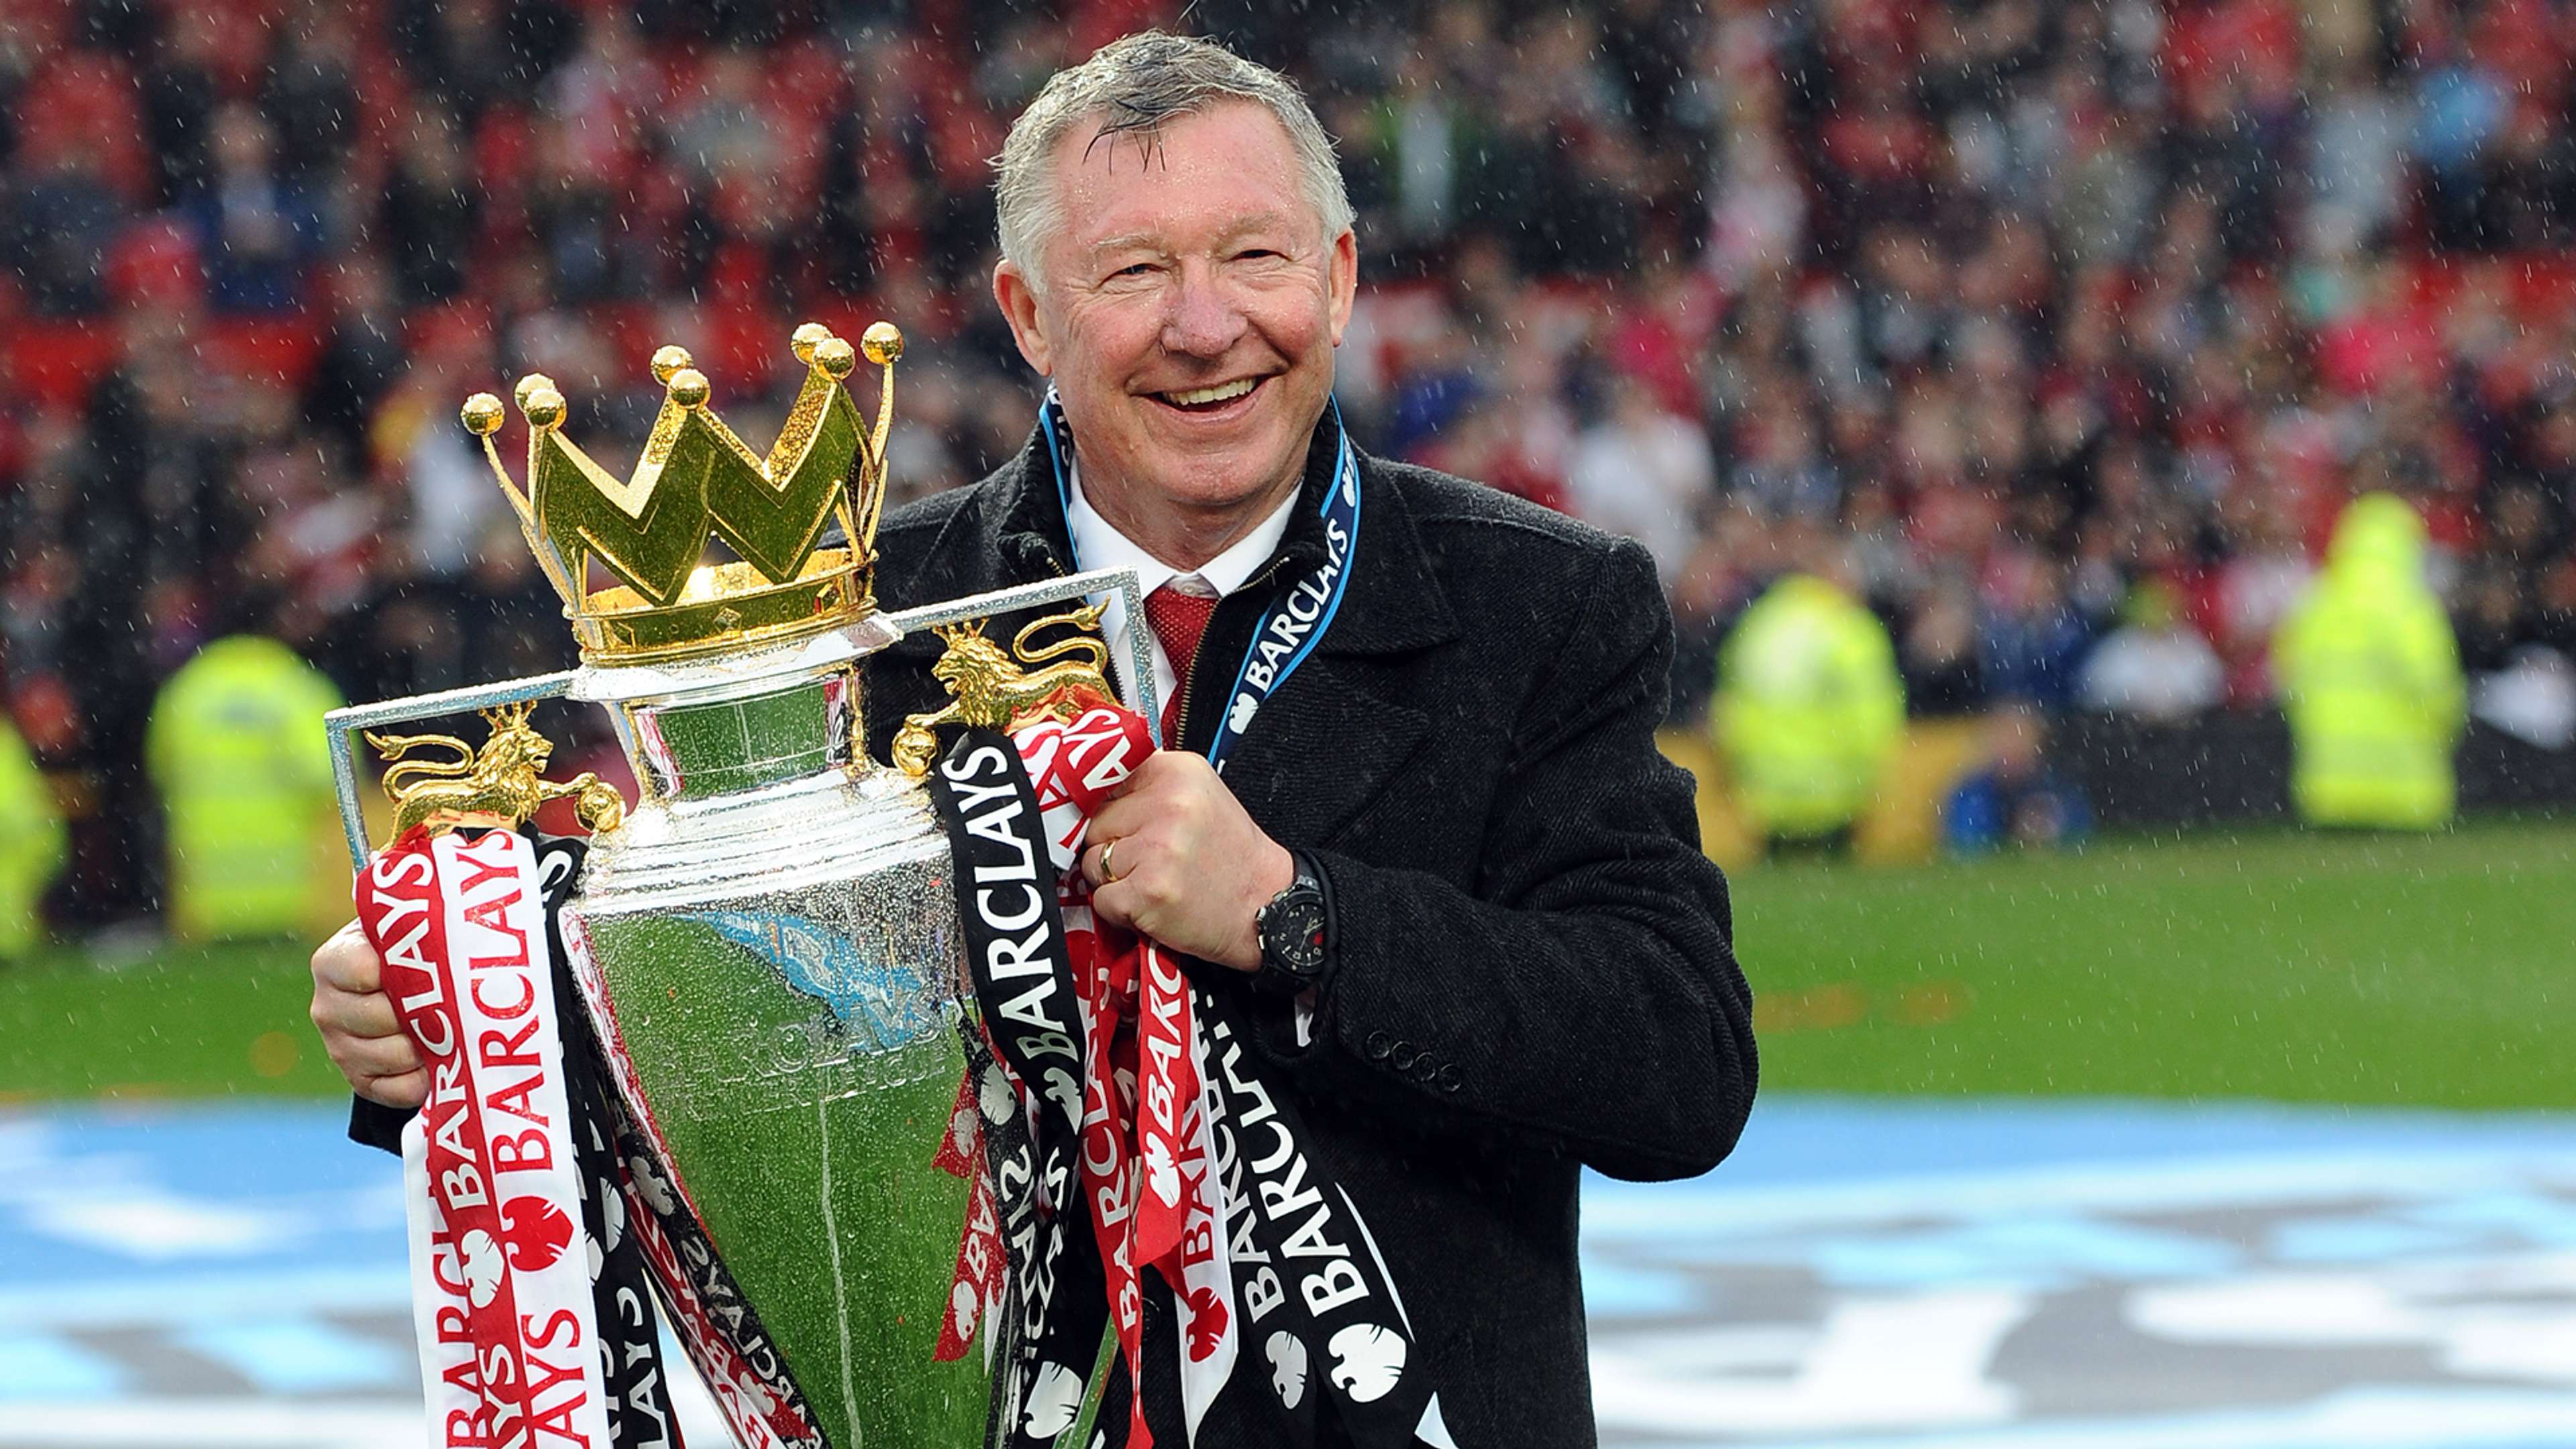 Sir Alex Ferguson Premier League Manchester United 2012-13